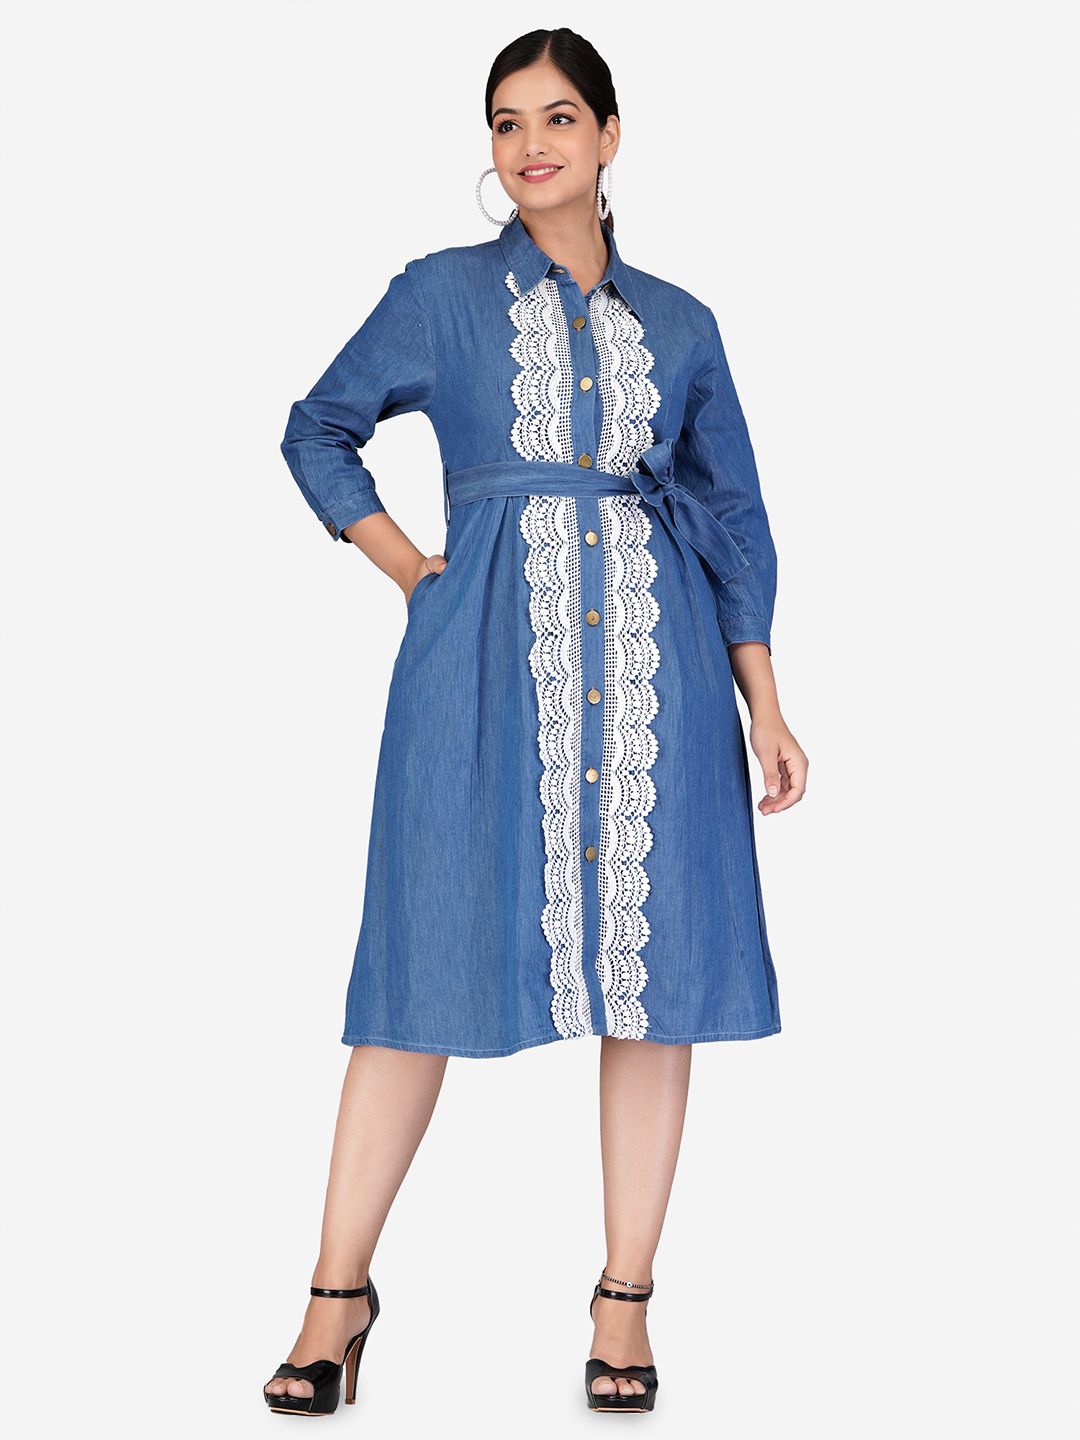 SUMAVI-FASHION Blue Ethnic Motifs Organic Cotton Denim A-Line Dress Price in India